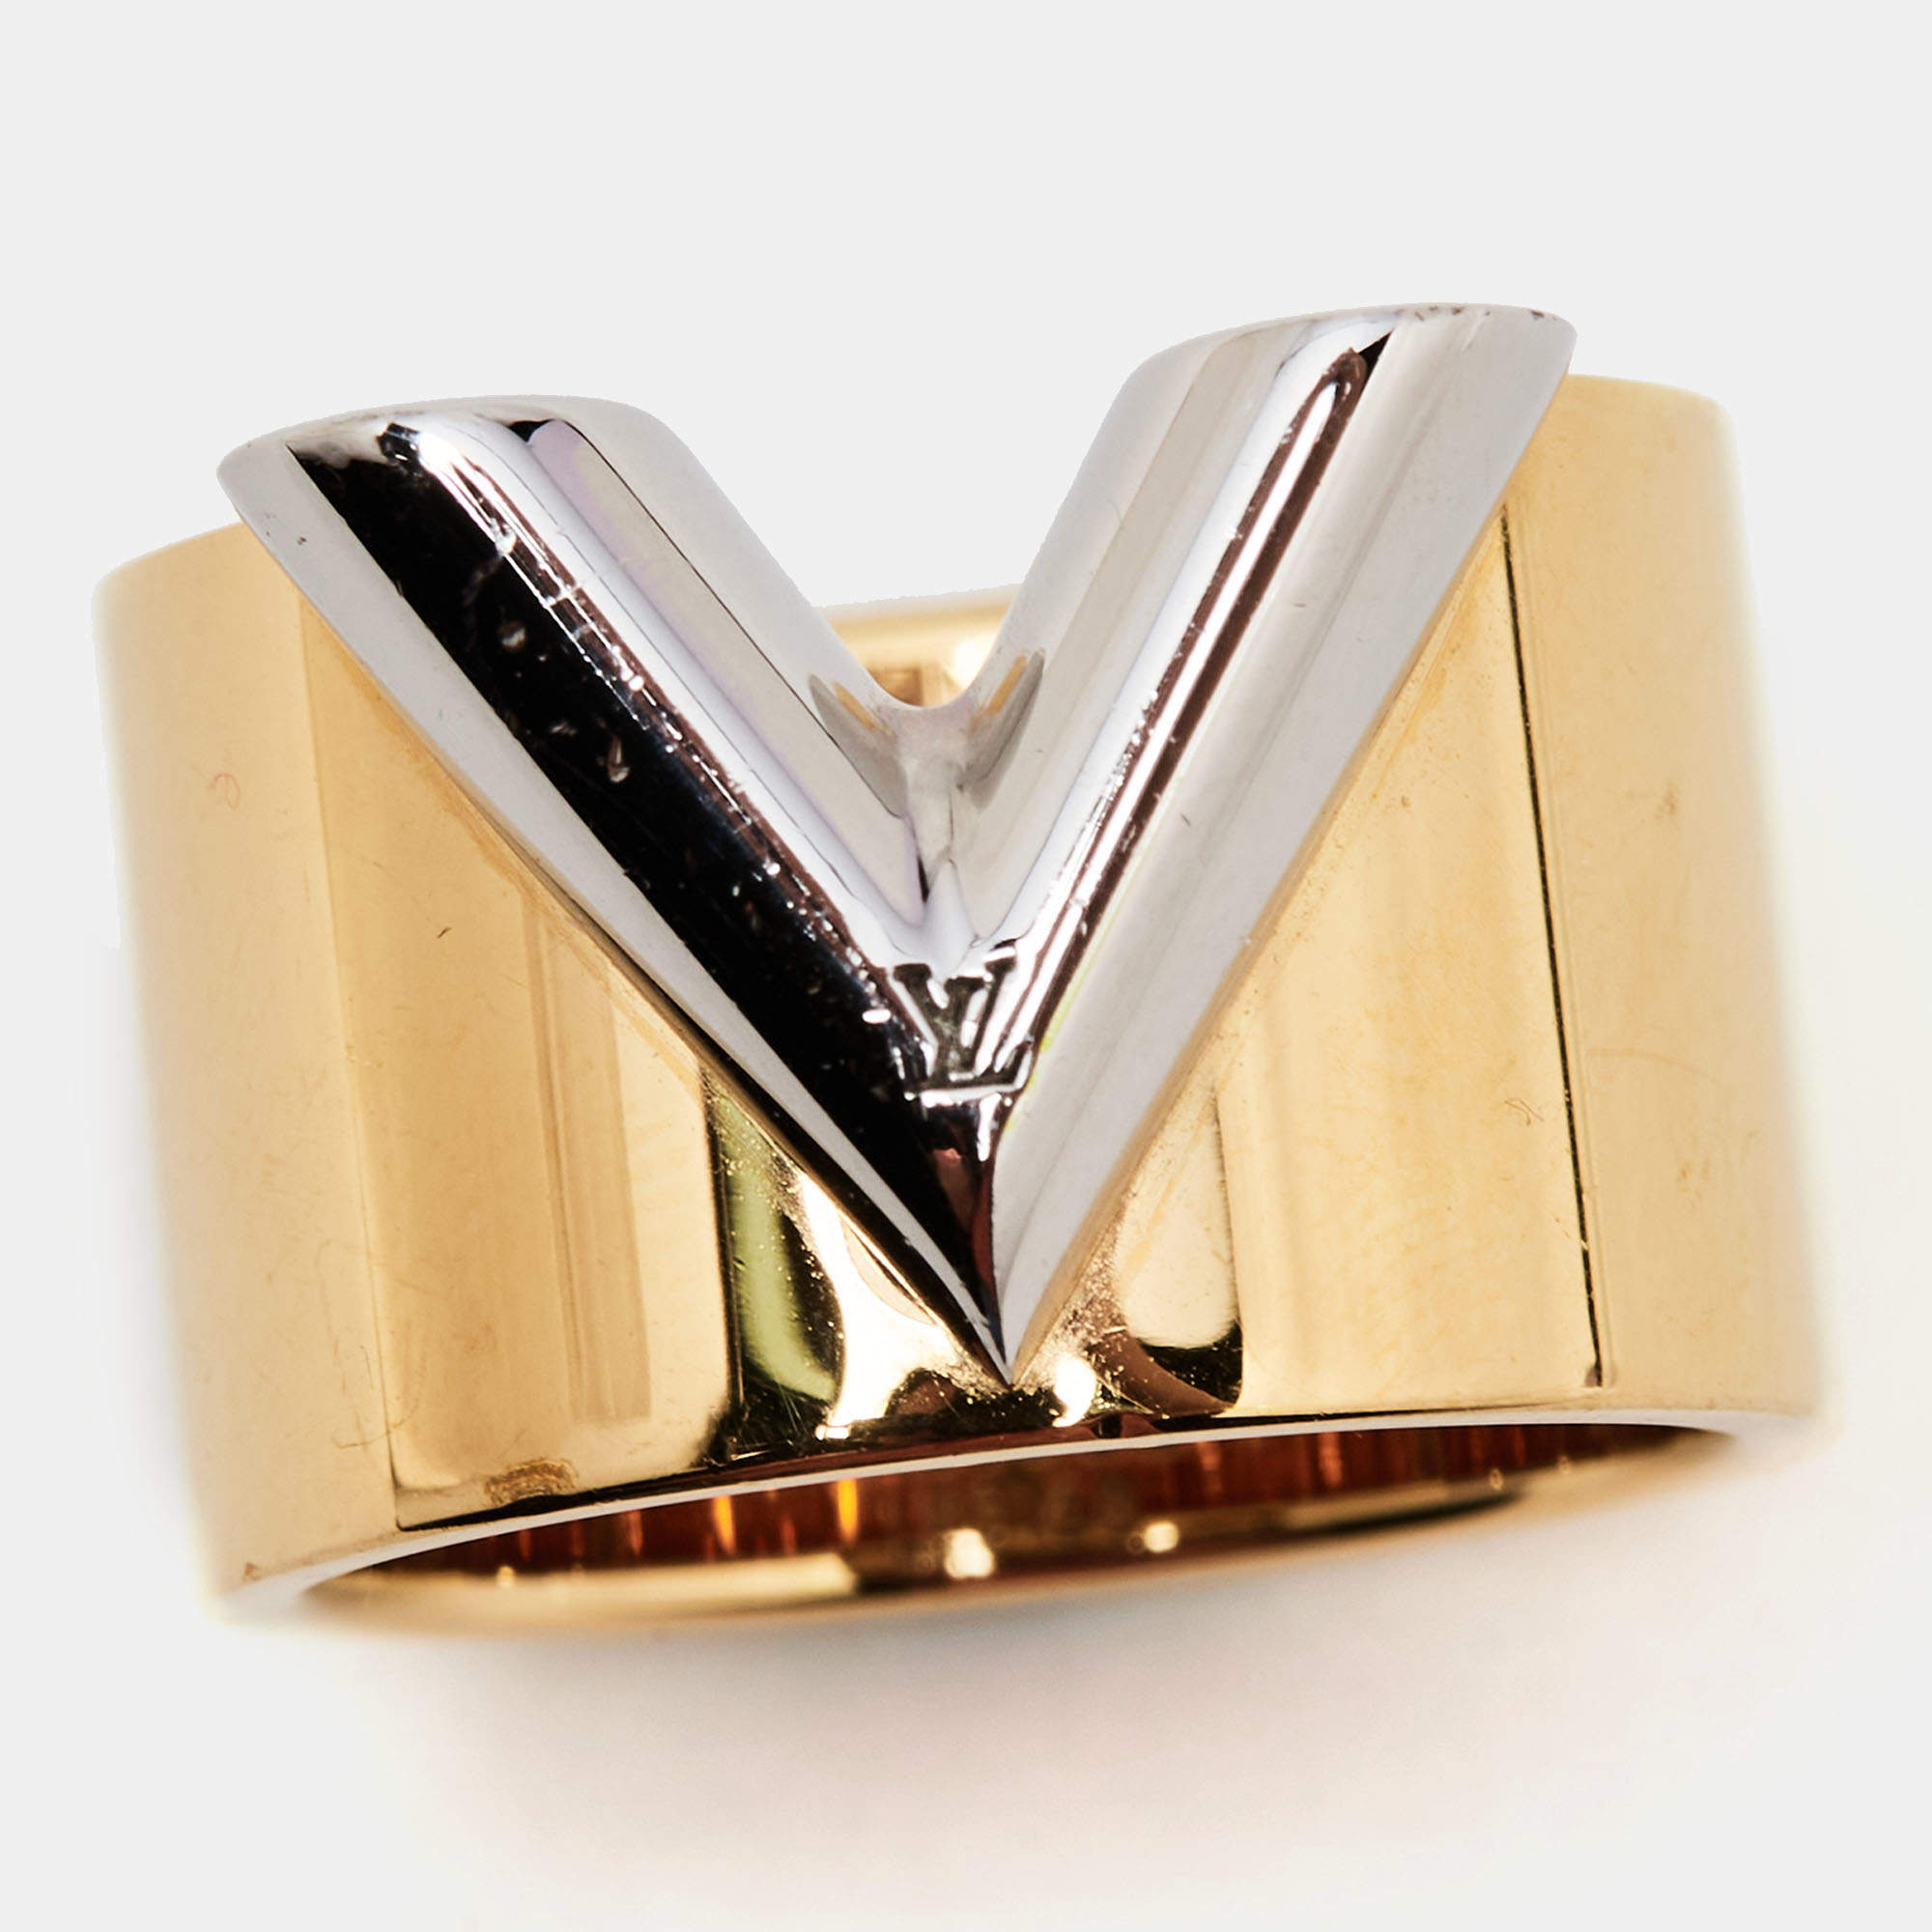 Louis Vuitton Essential V Two Tone Ring Size 54 Louis Vuitton